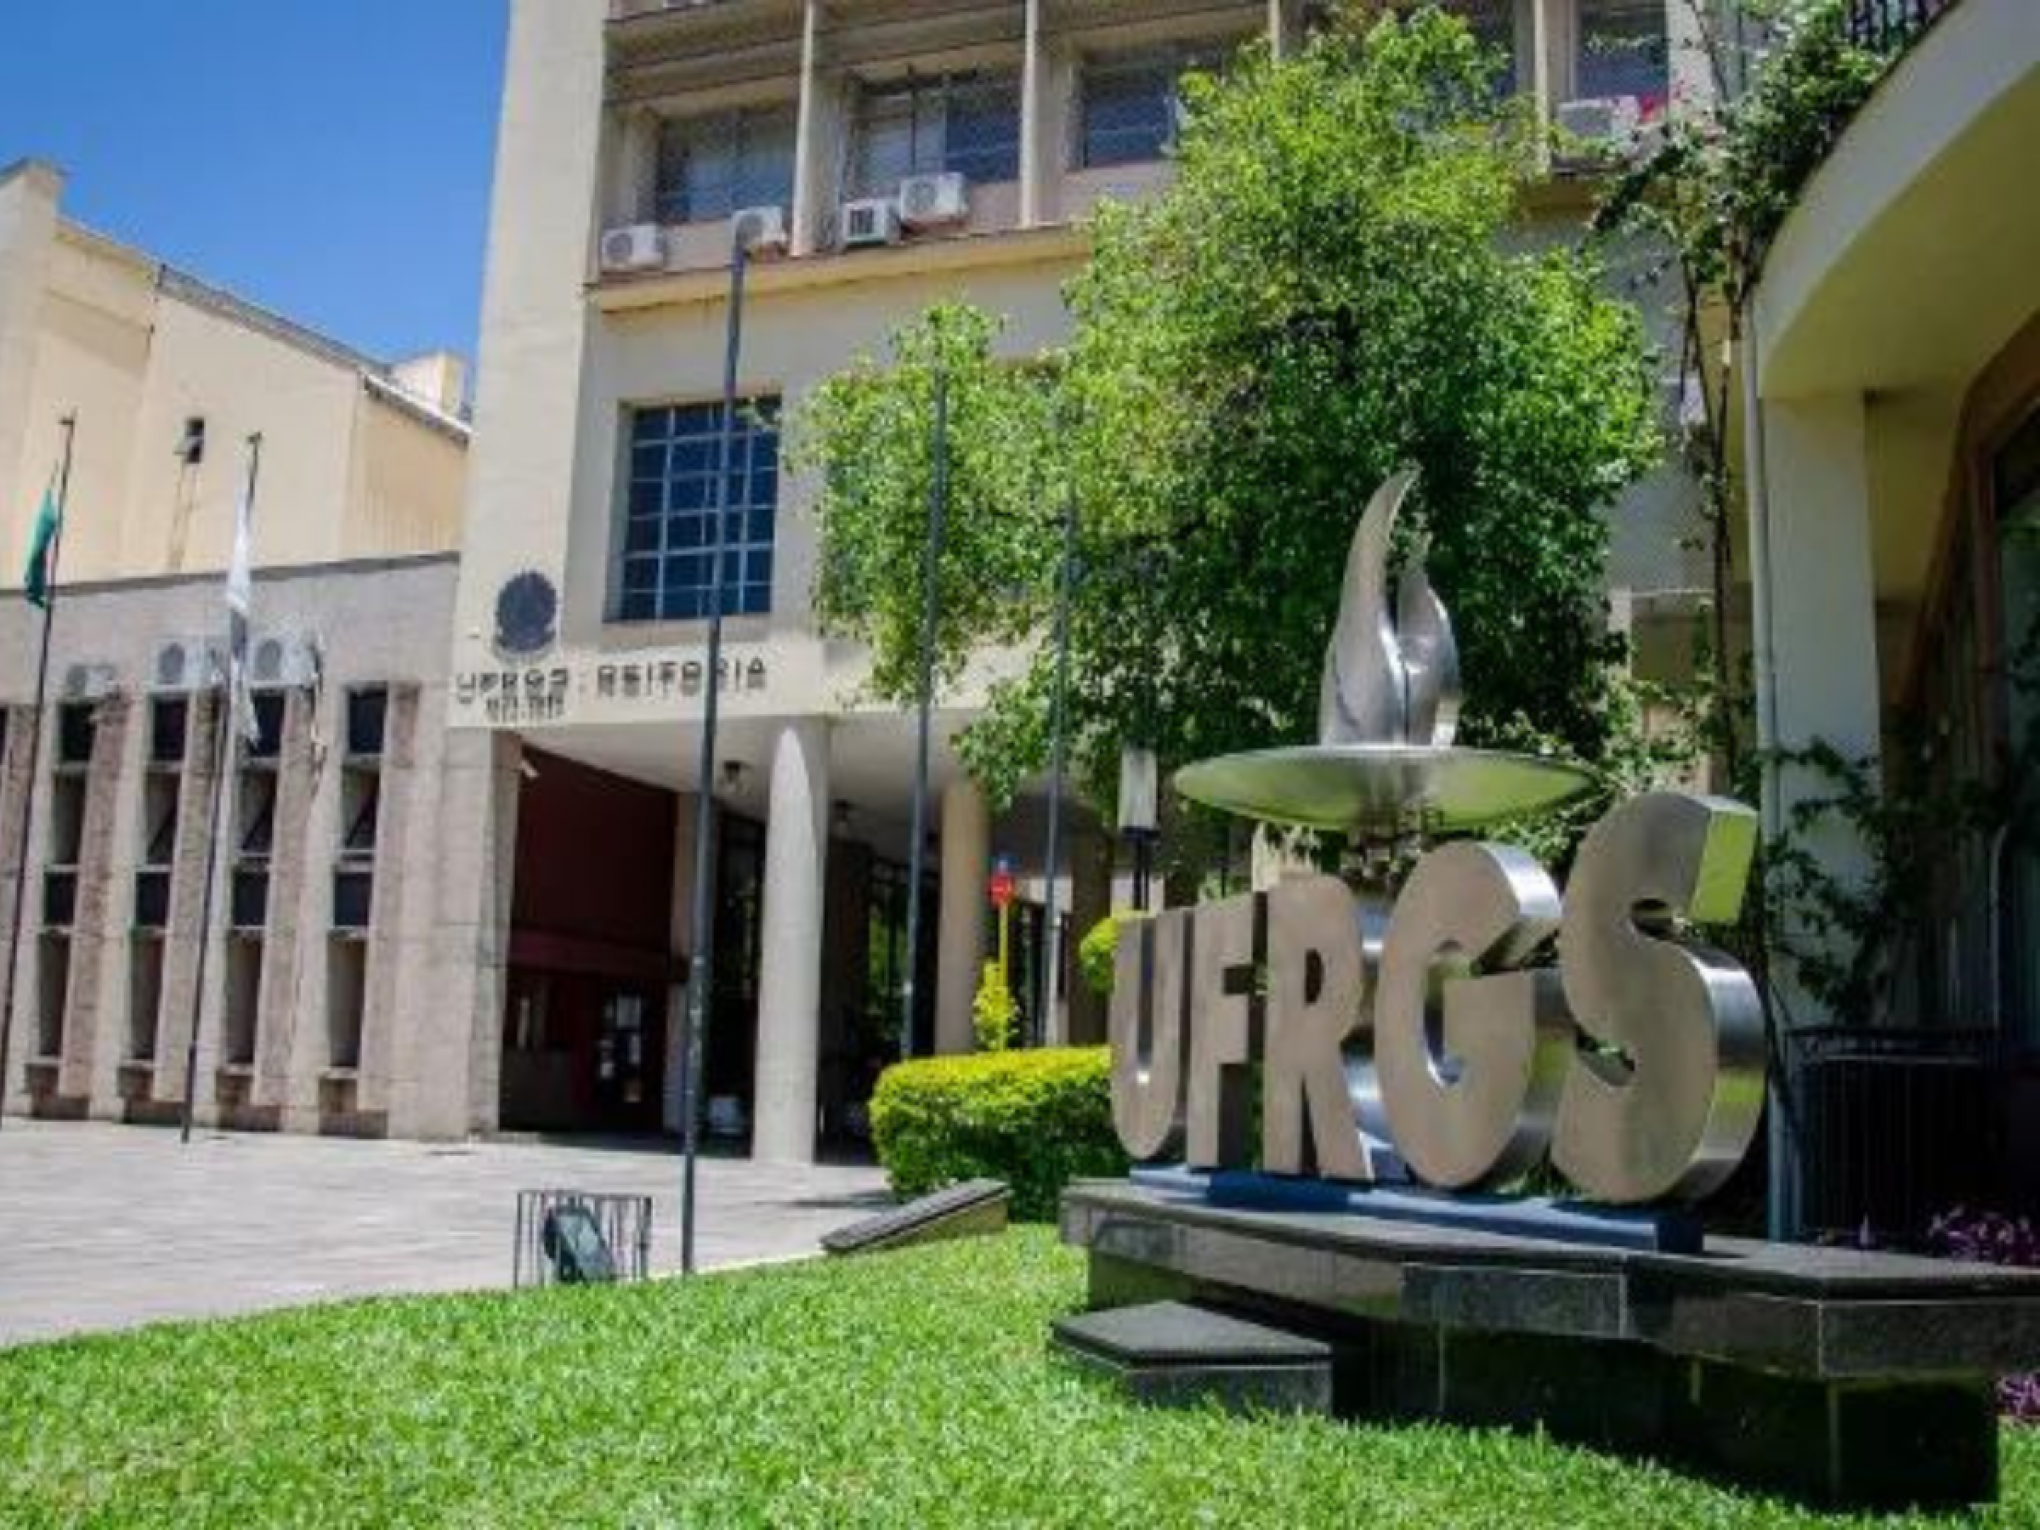 Governo federal anuncia novo campus da UFRGS na Serra gaúcha